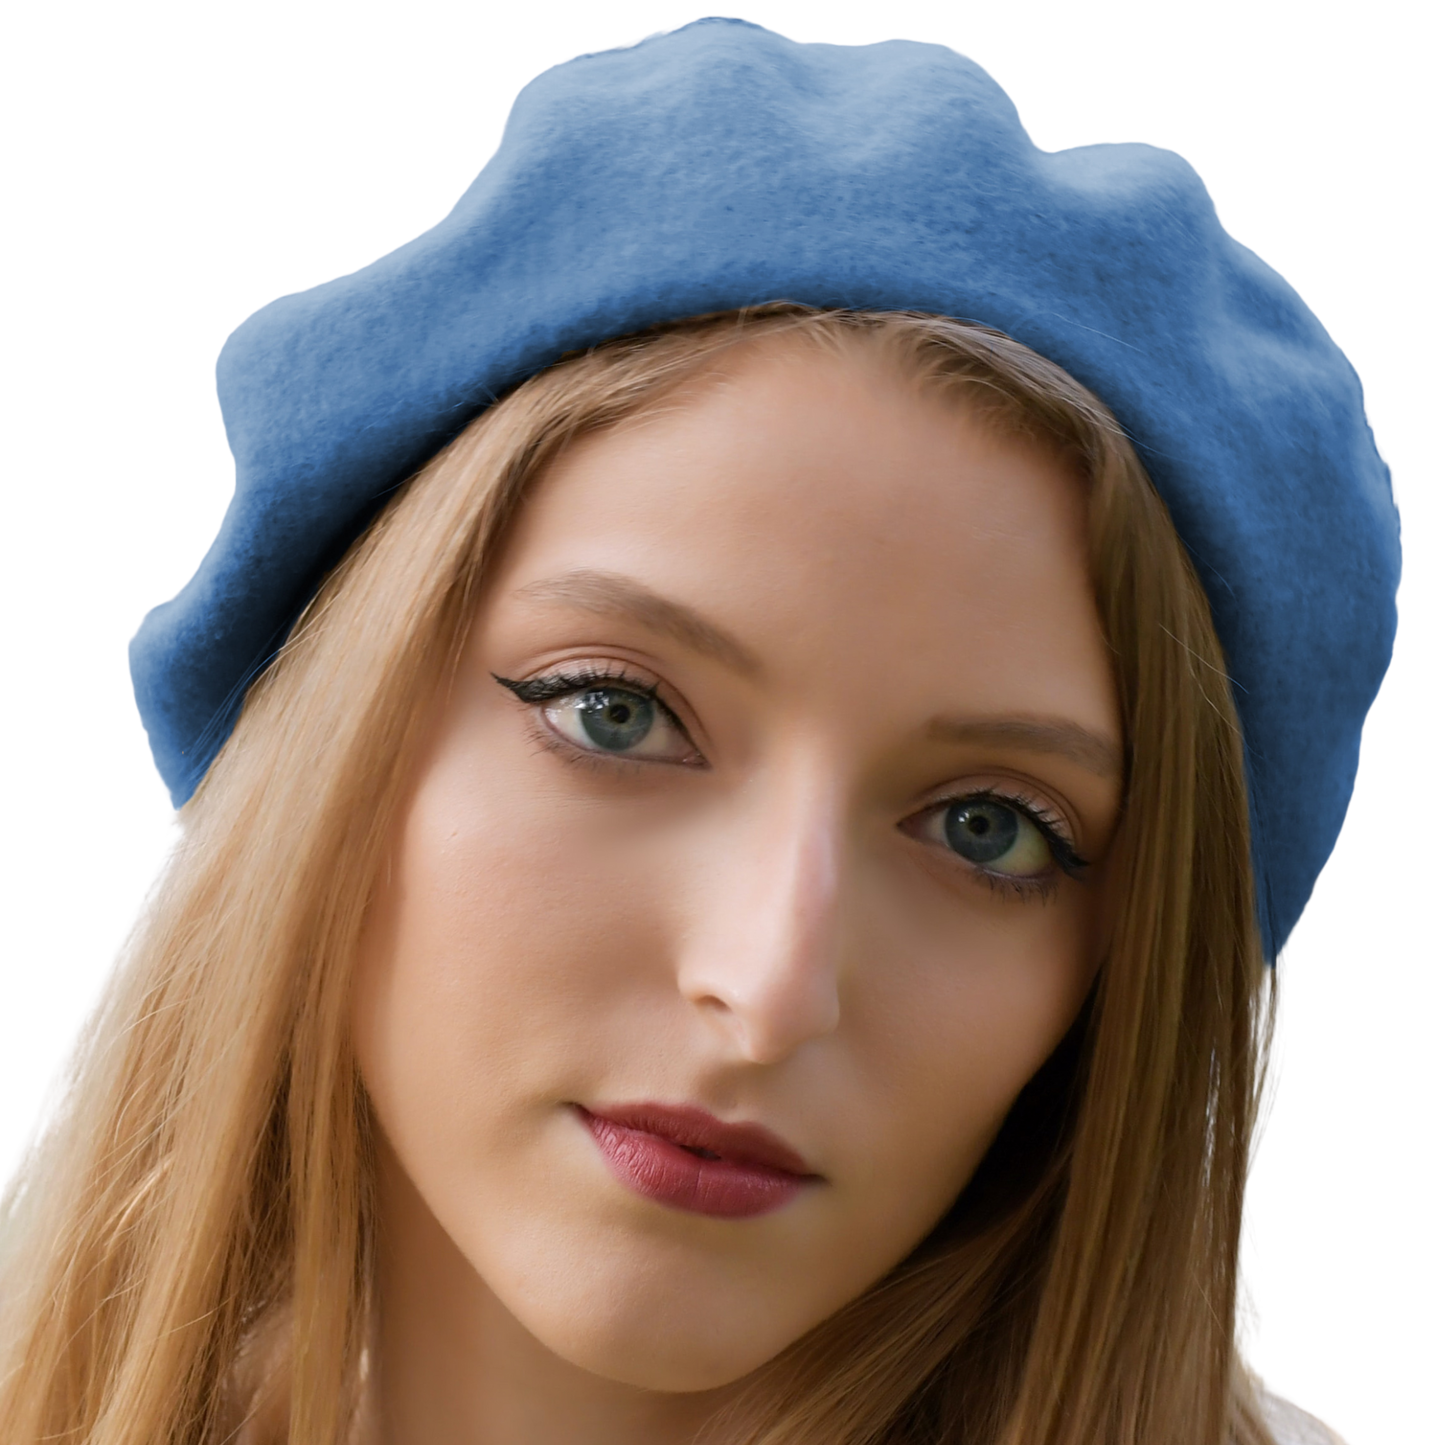 French beret -denim blue